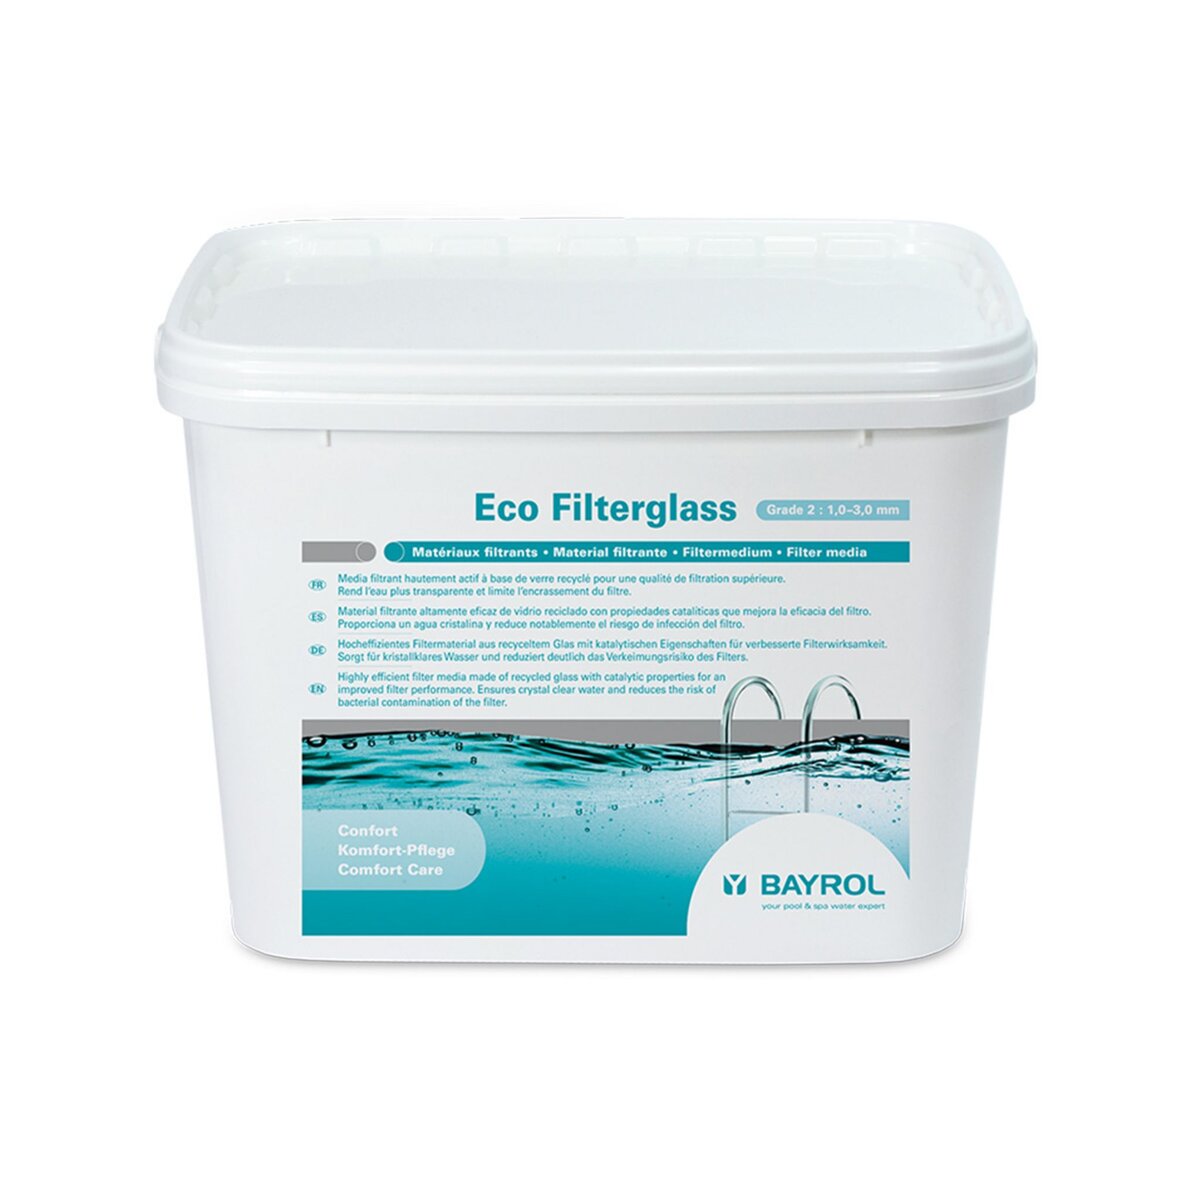 Bayrol Verre filtrant Eco Filterglass Grade 2 20 kg - Bayrol